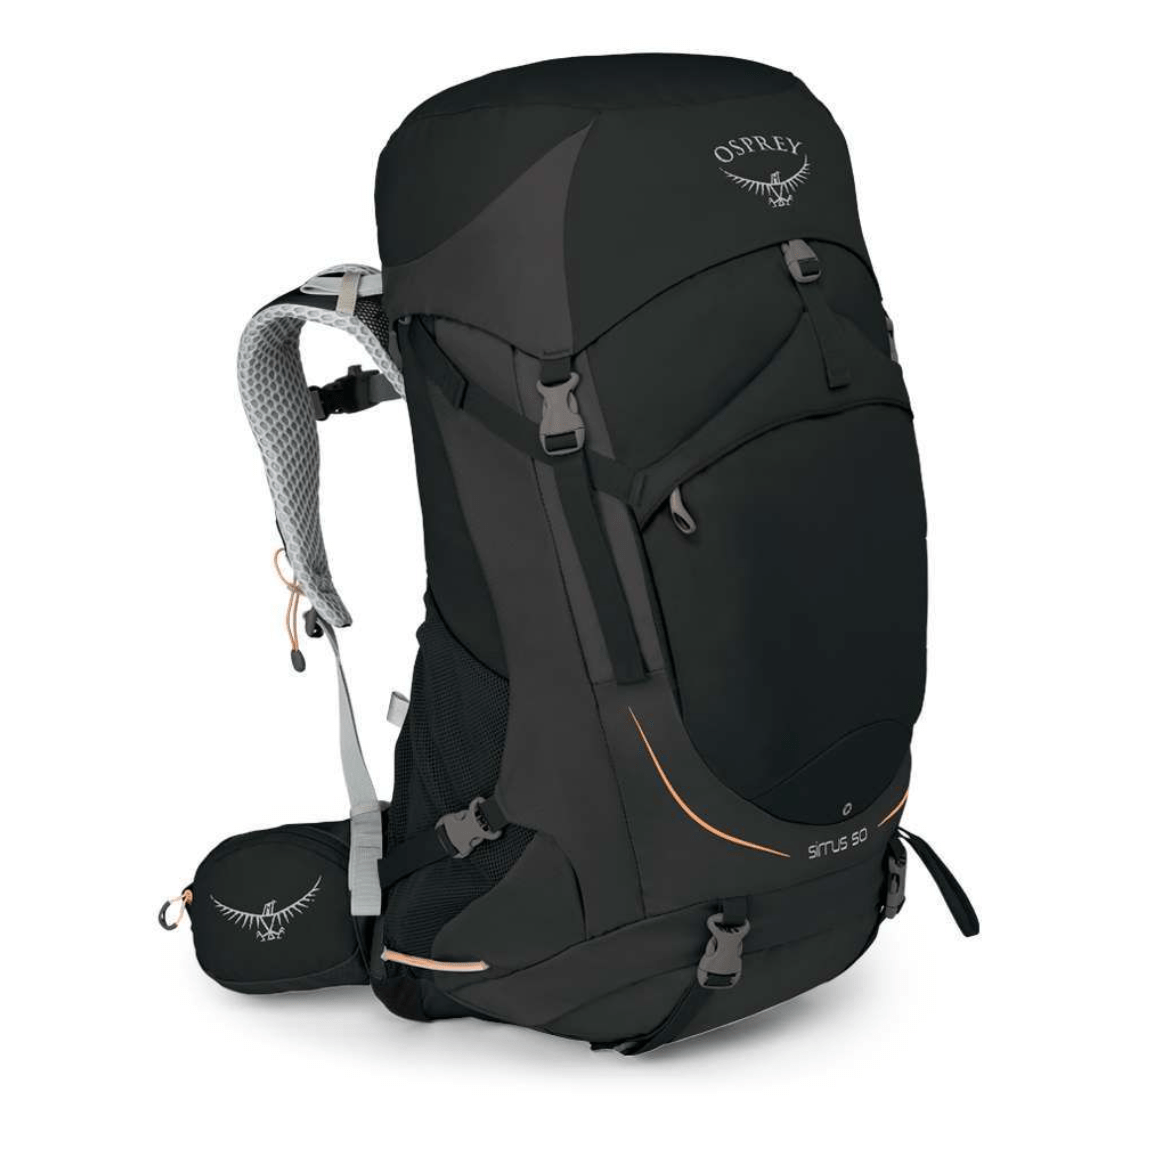 Osprey Bag WS/M / Black Ospery Sirrus 50 Backpacking